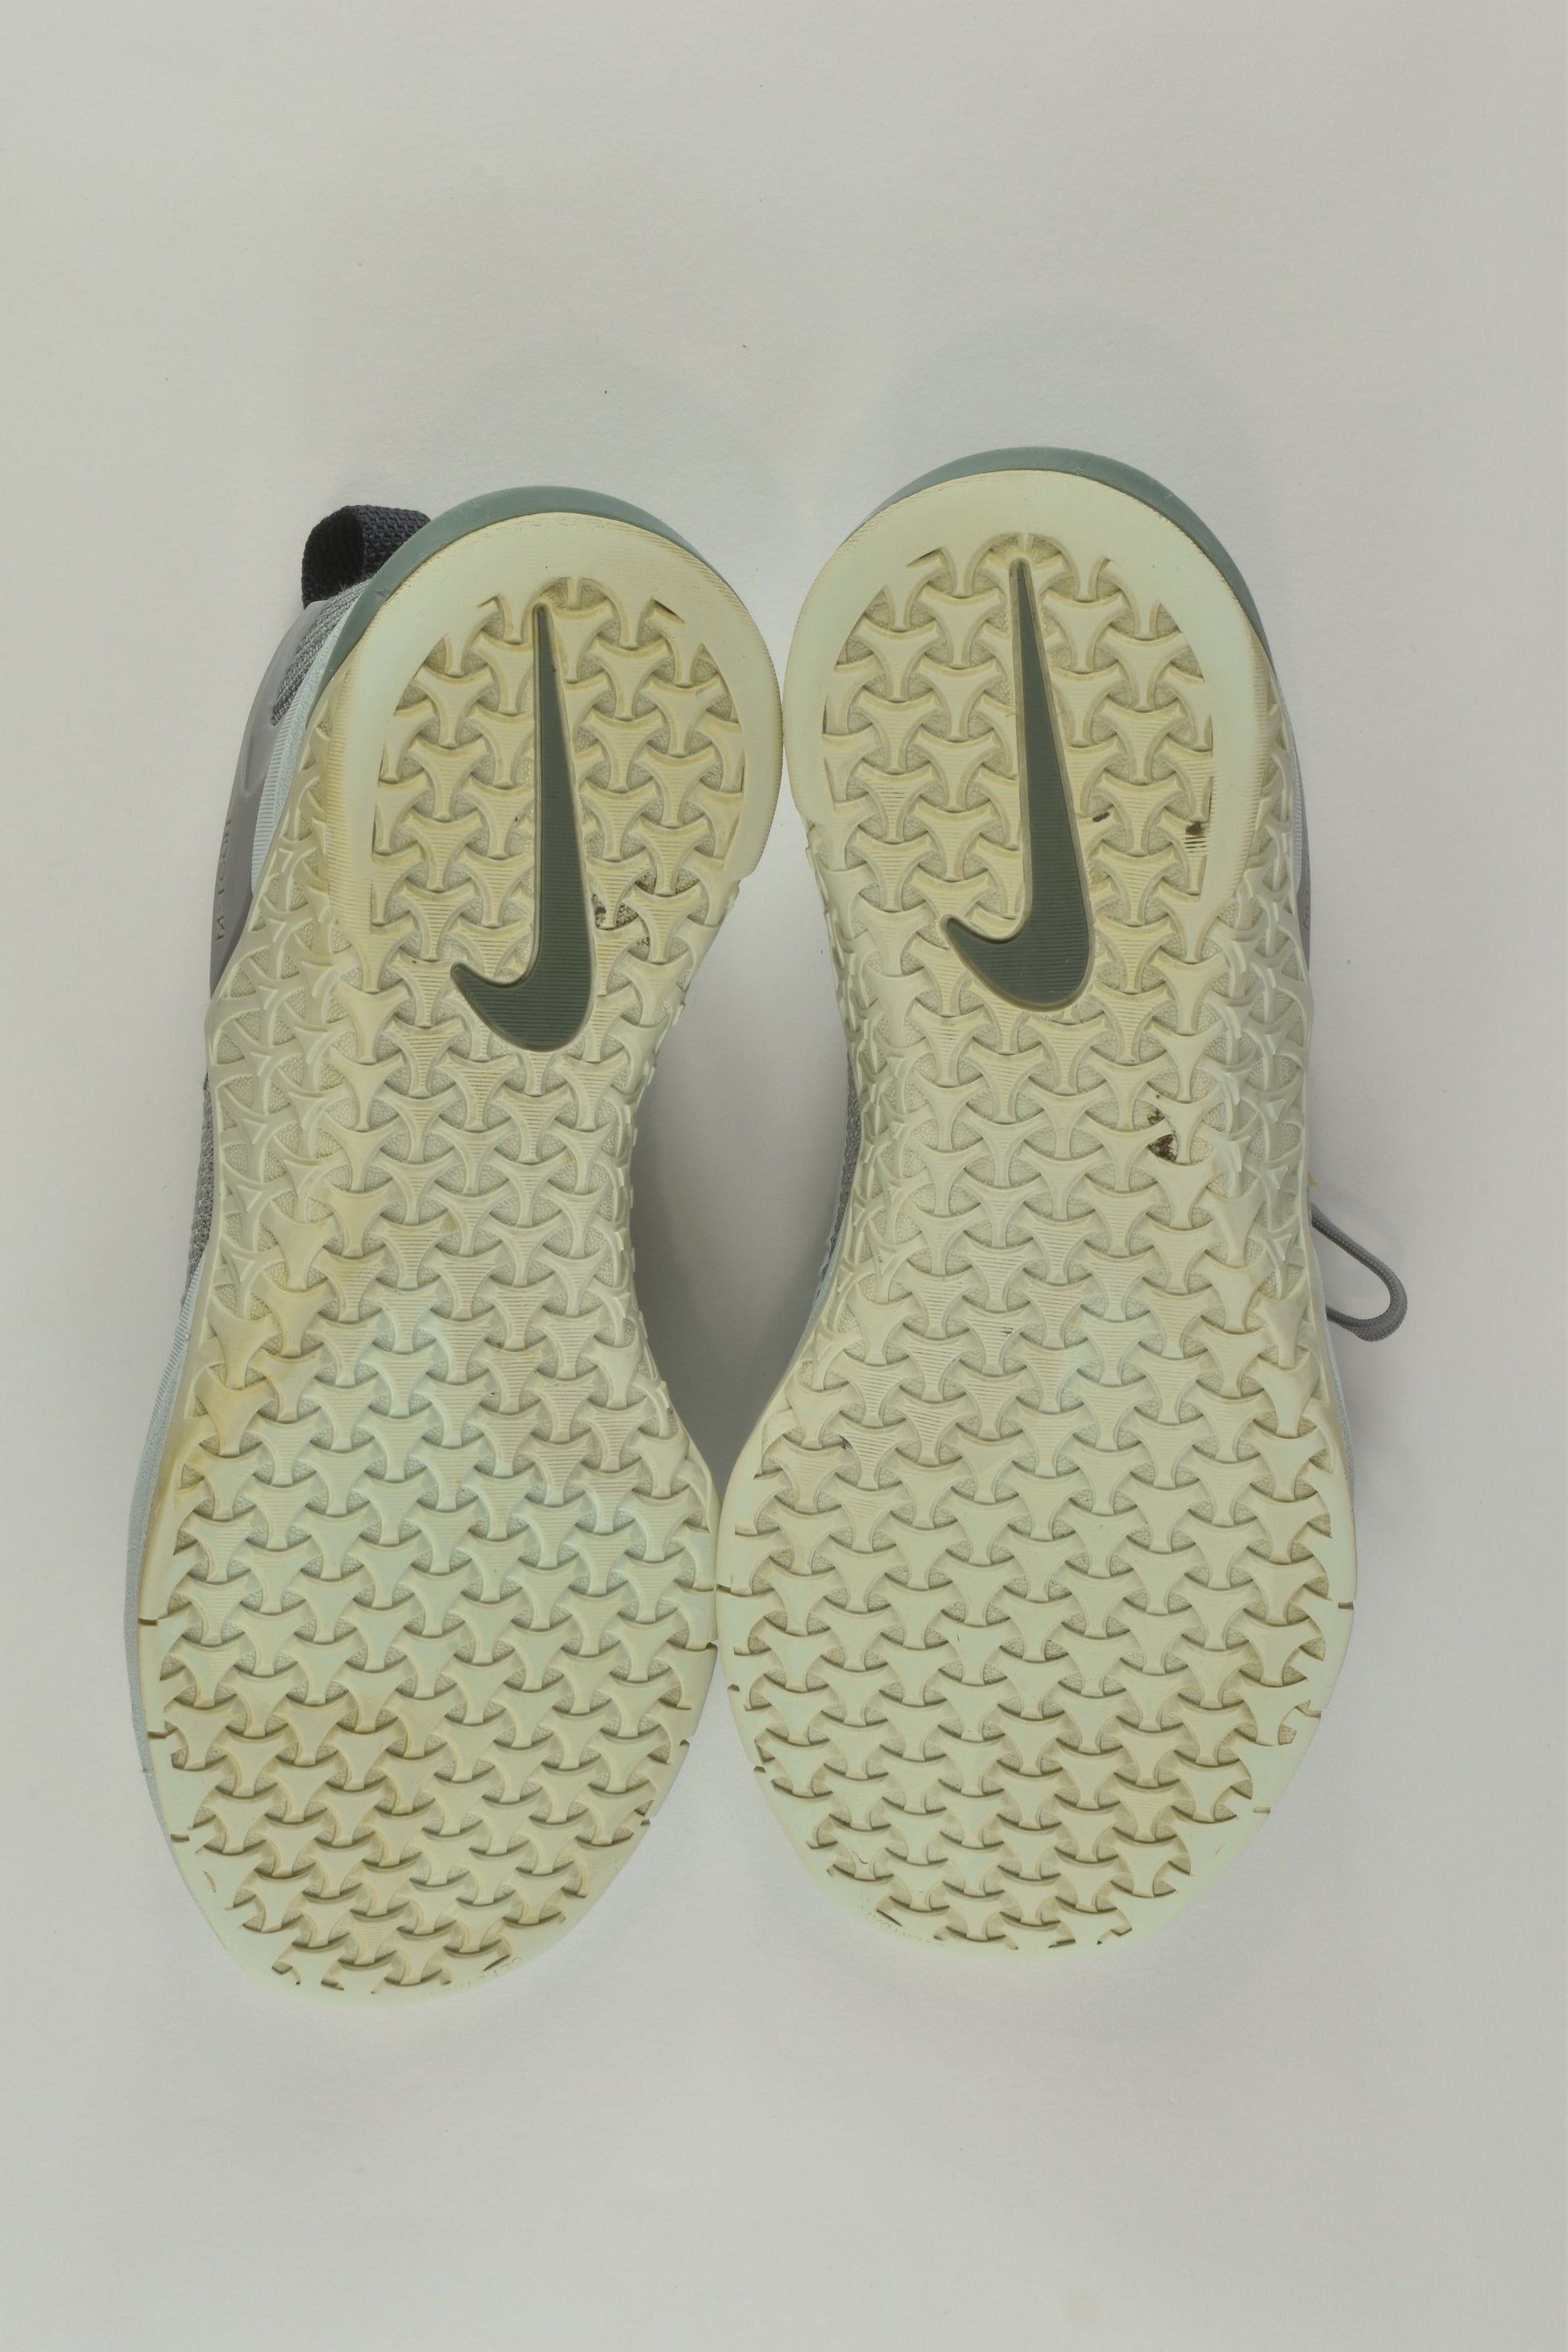 Nike Size UK 4 Metcon Shoes